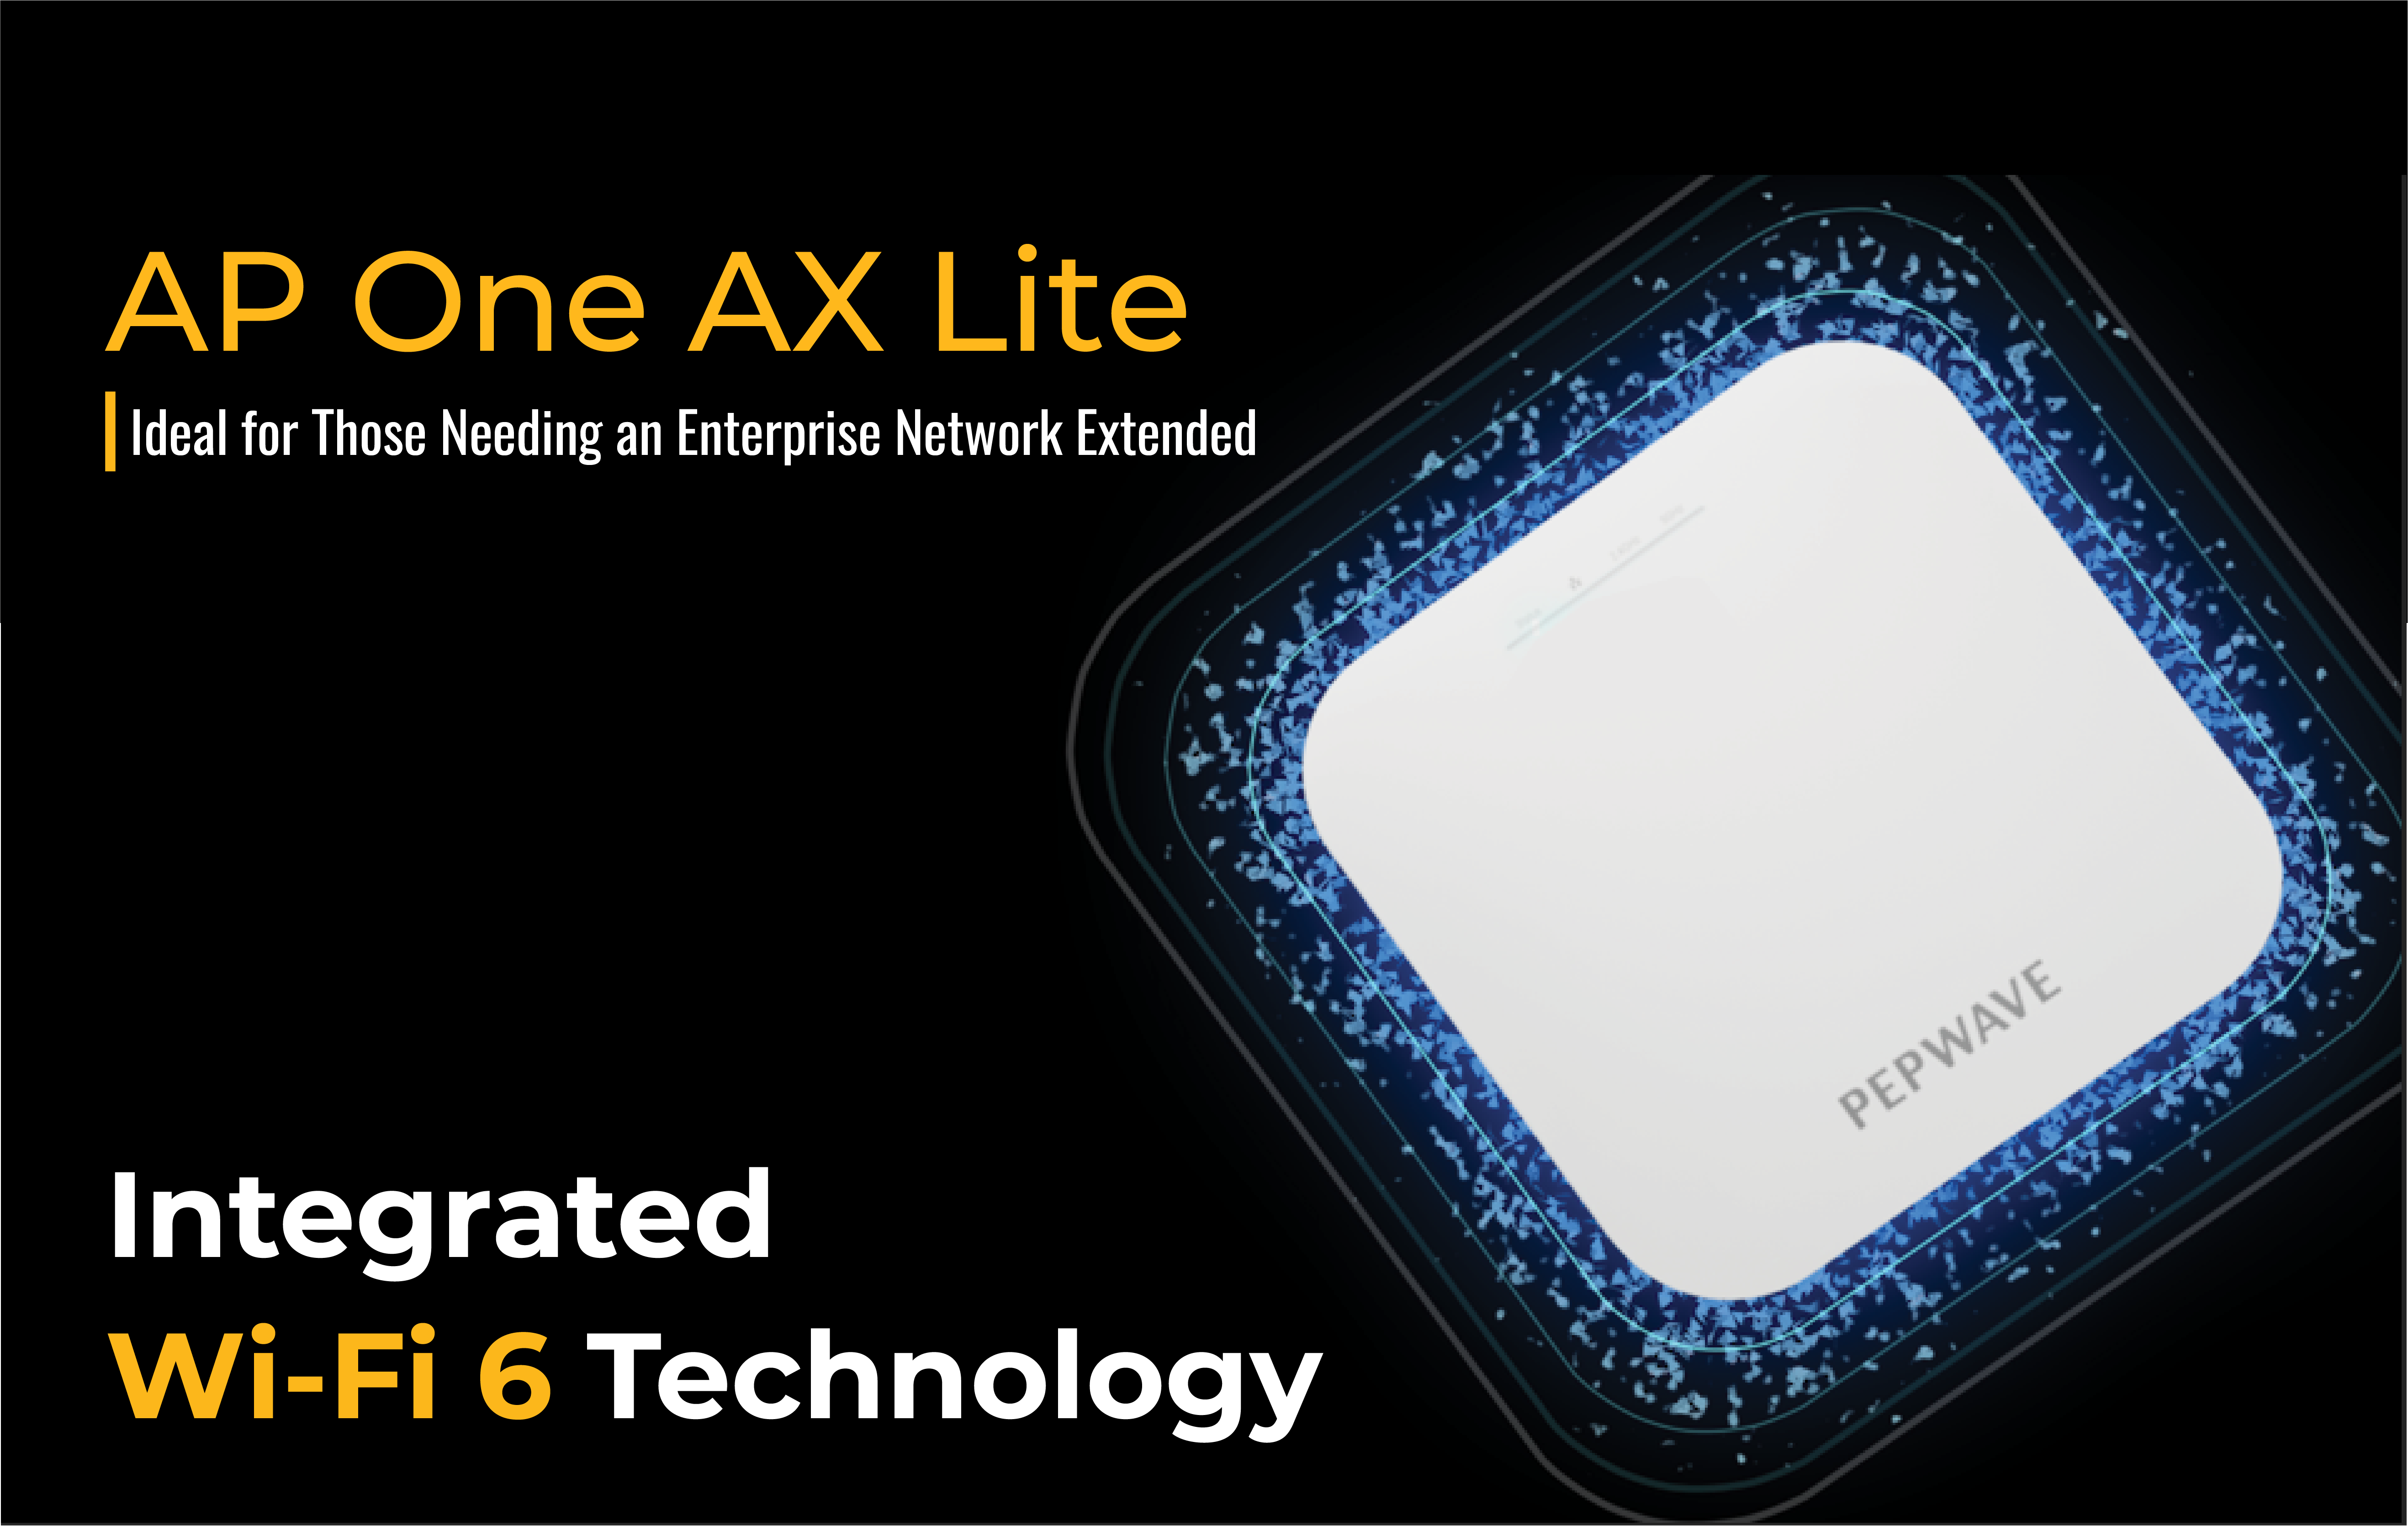 AP One AX Lite. Extend Your Enterprise Network - Peplink